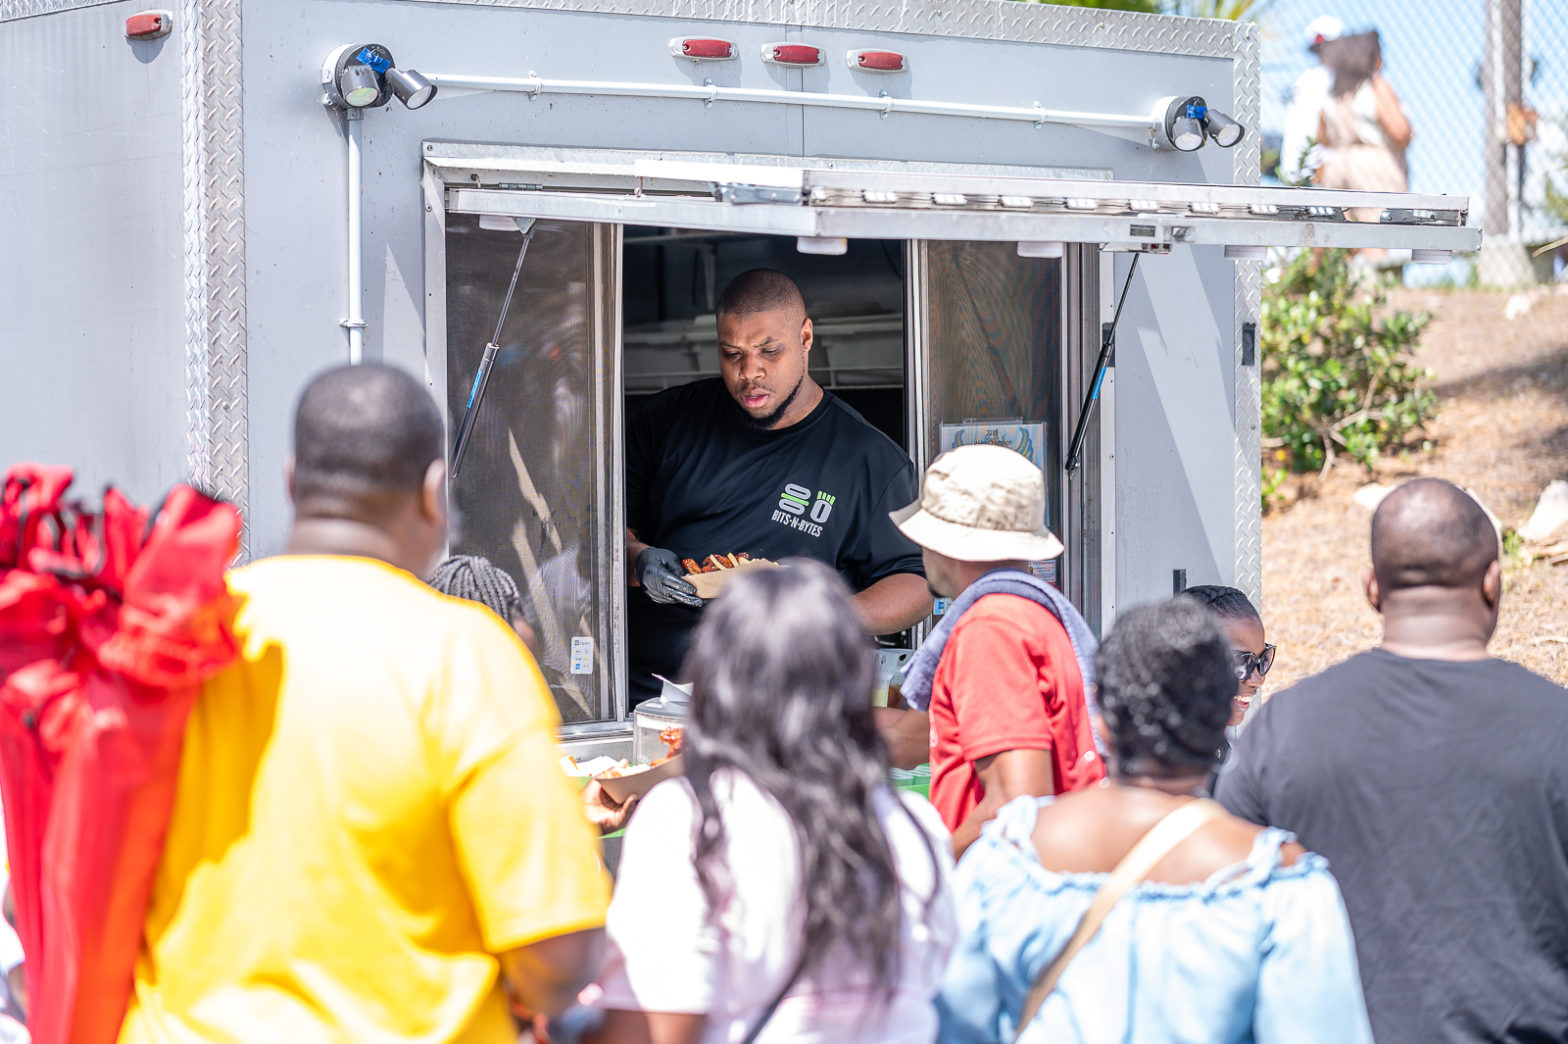 Charleston, South Carolina's Largest Black Food Truck Festival Yet